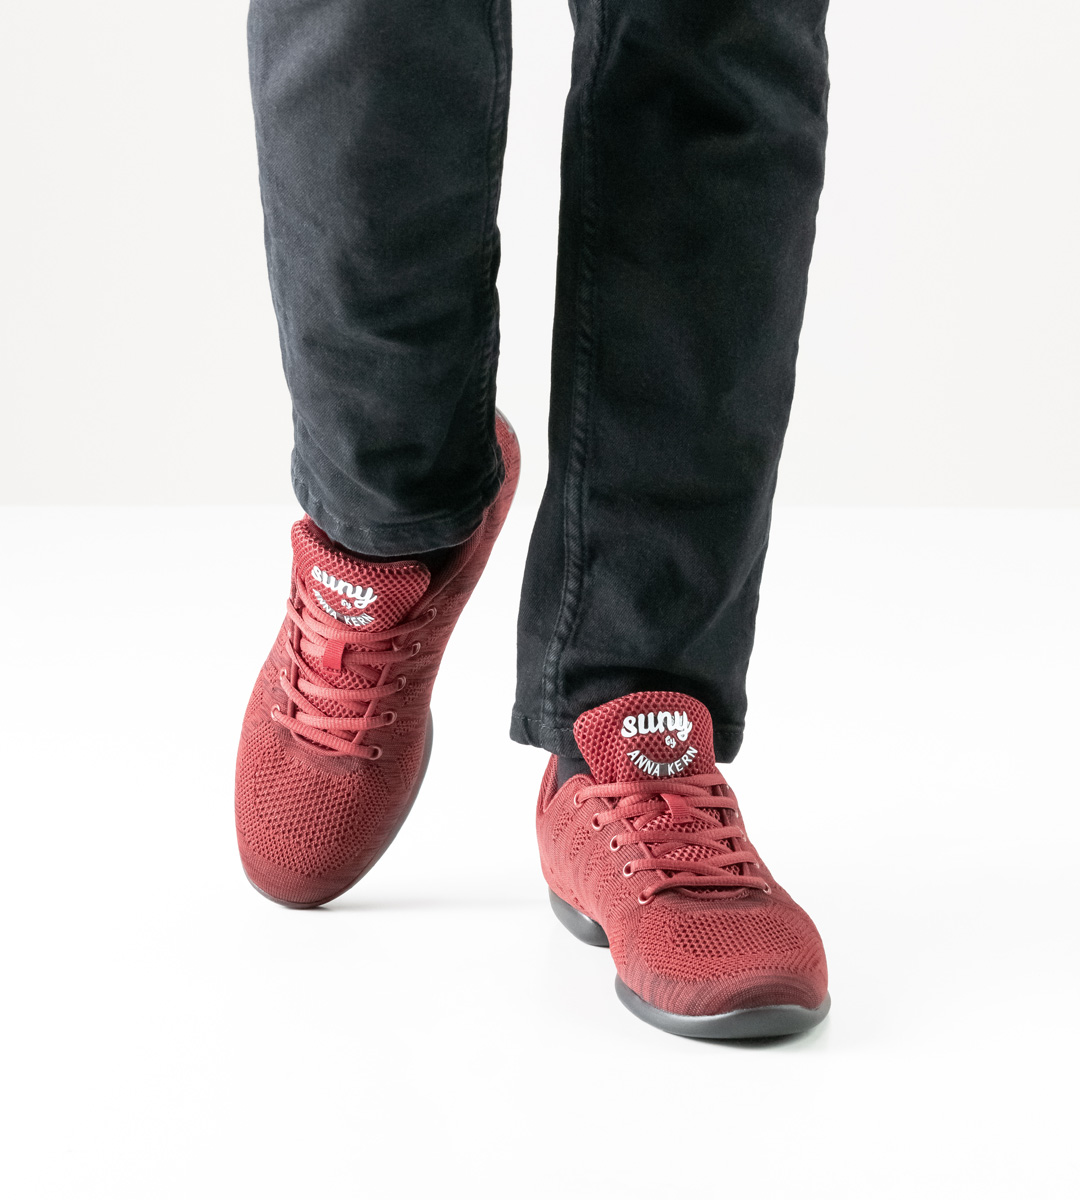 Kizomba Herrentanz-Sneaker von Suny in Kombination mit schwarzer Jeans